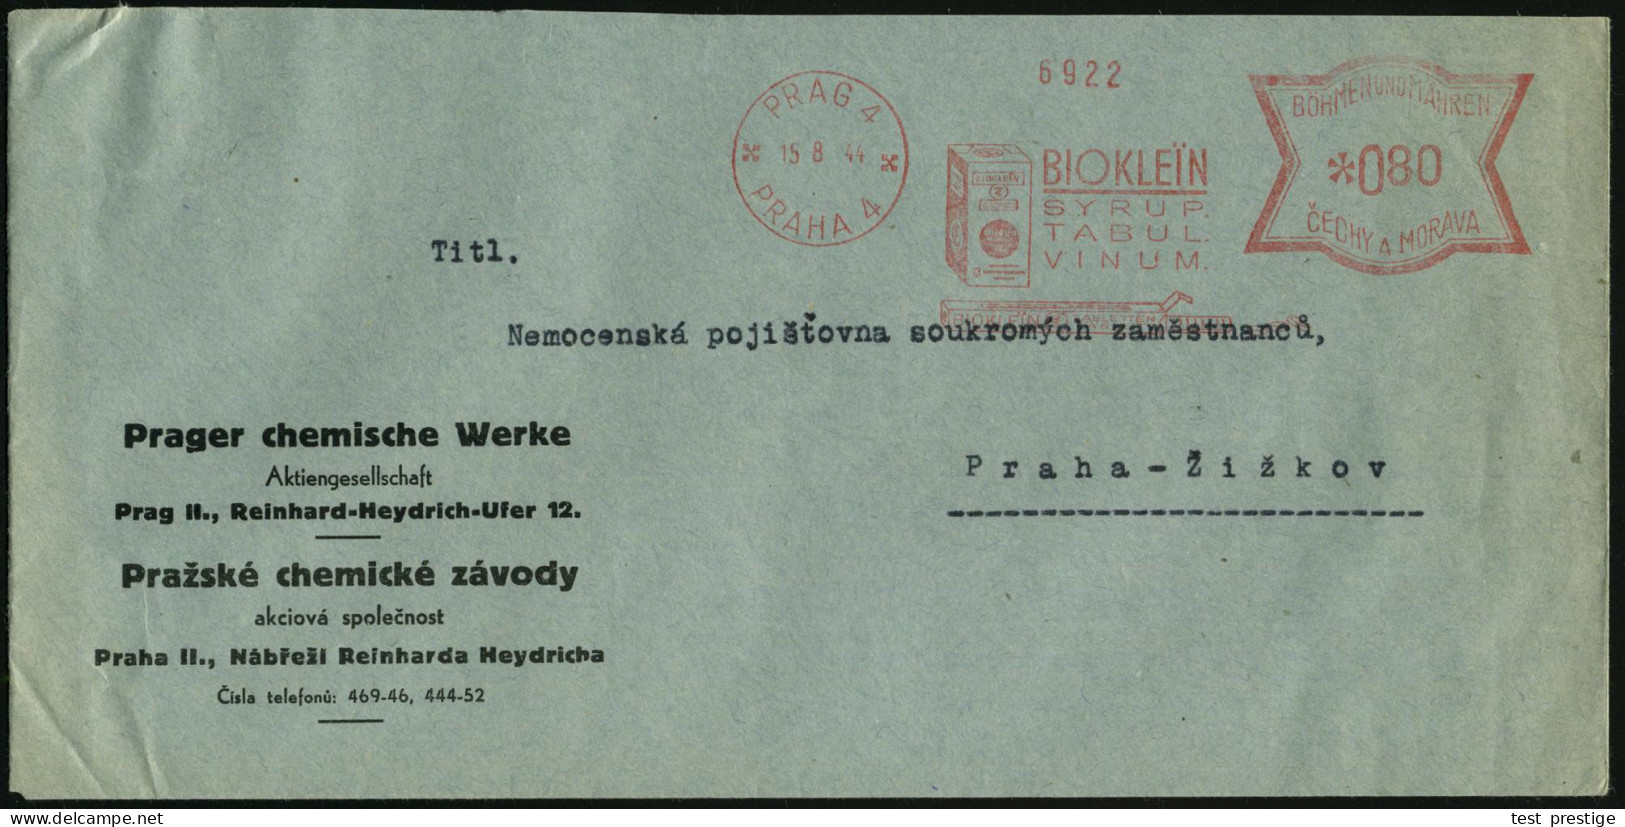 BÖHMEN & MÄHREN 1944 (15.8.) AFS Francotyp: PRAG 4/PRAHA 4/BIOKLEIN/SYRUP/TABUL/VINUM.. (Bioklein-Packung) Firmen-Bf.: P - Chemistry